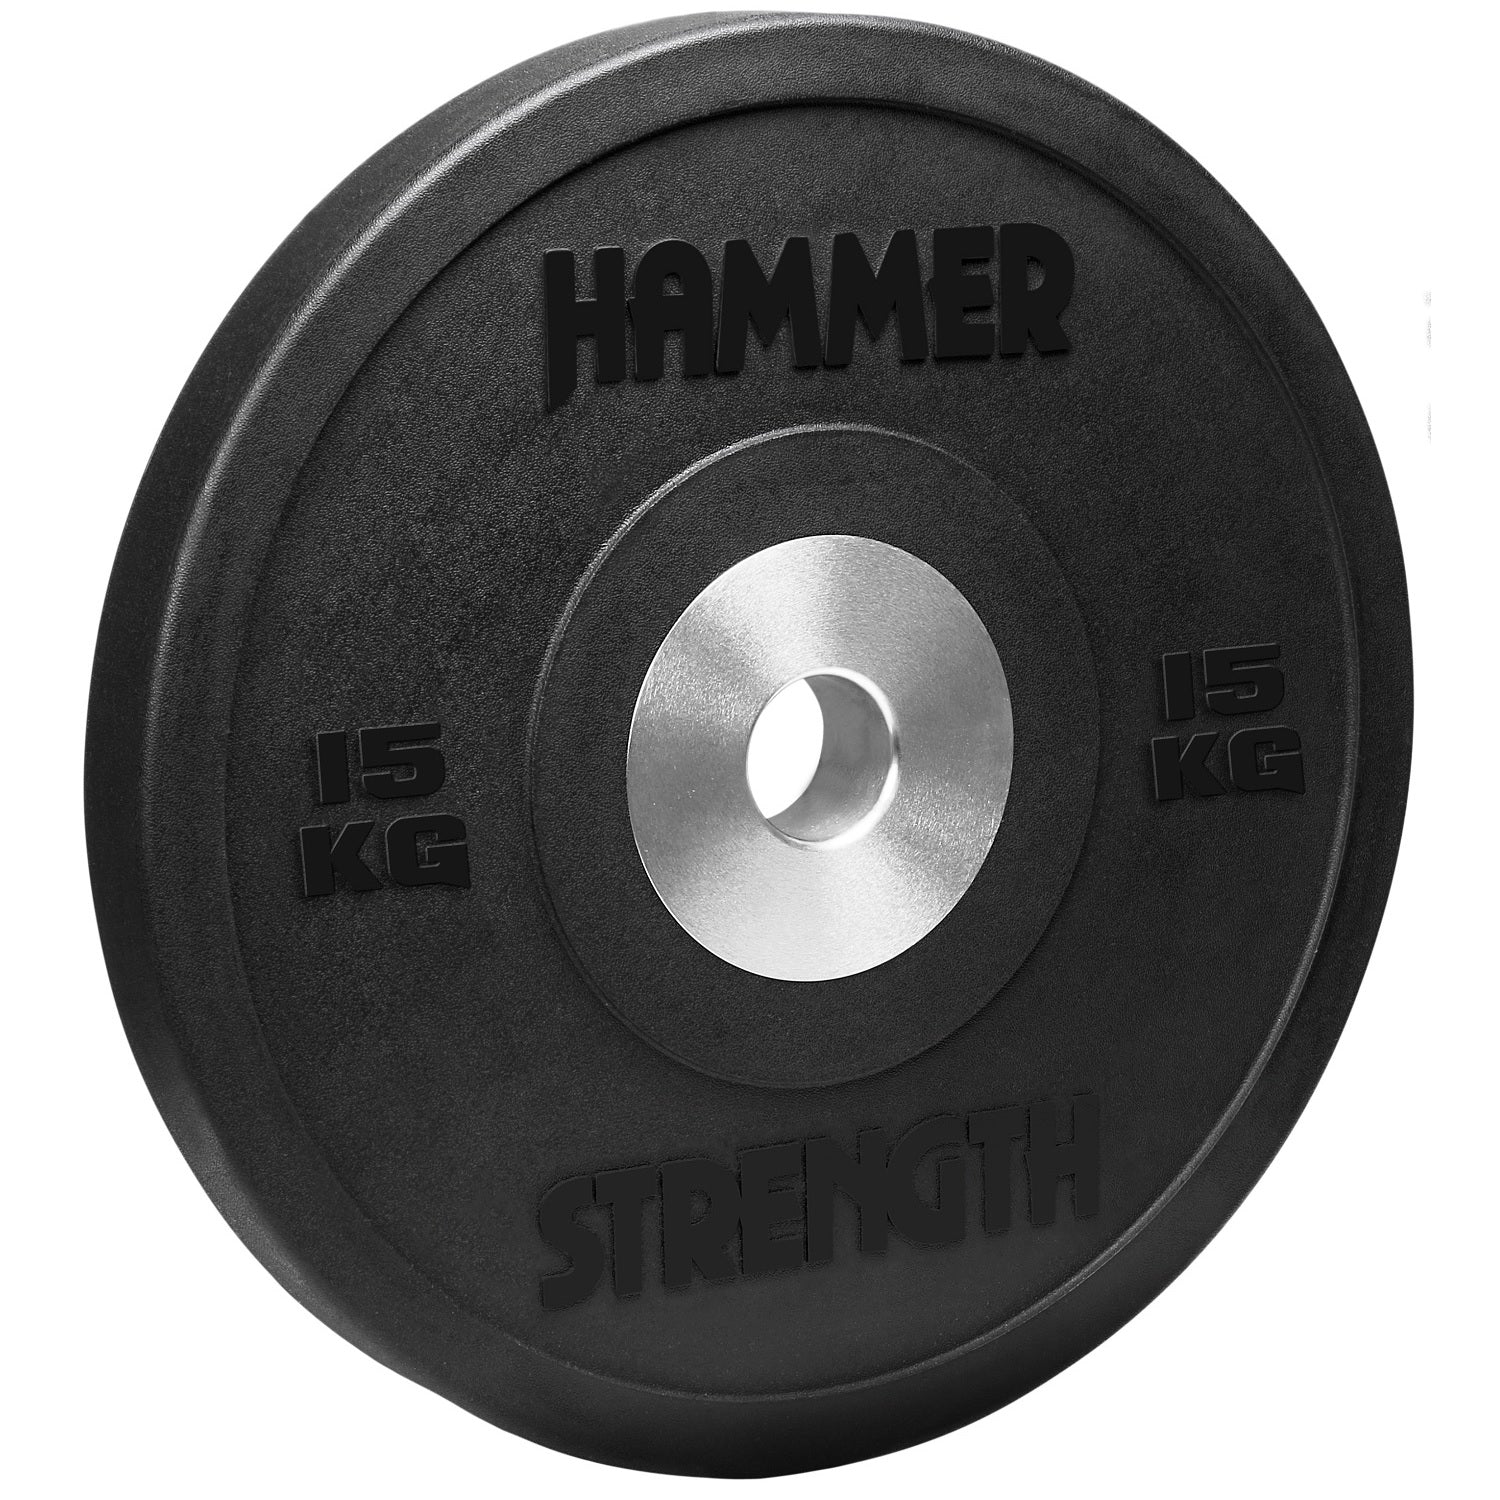 Hammer Strength Premium Rubber Bumper Plates